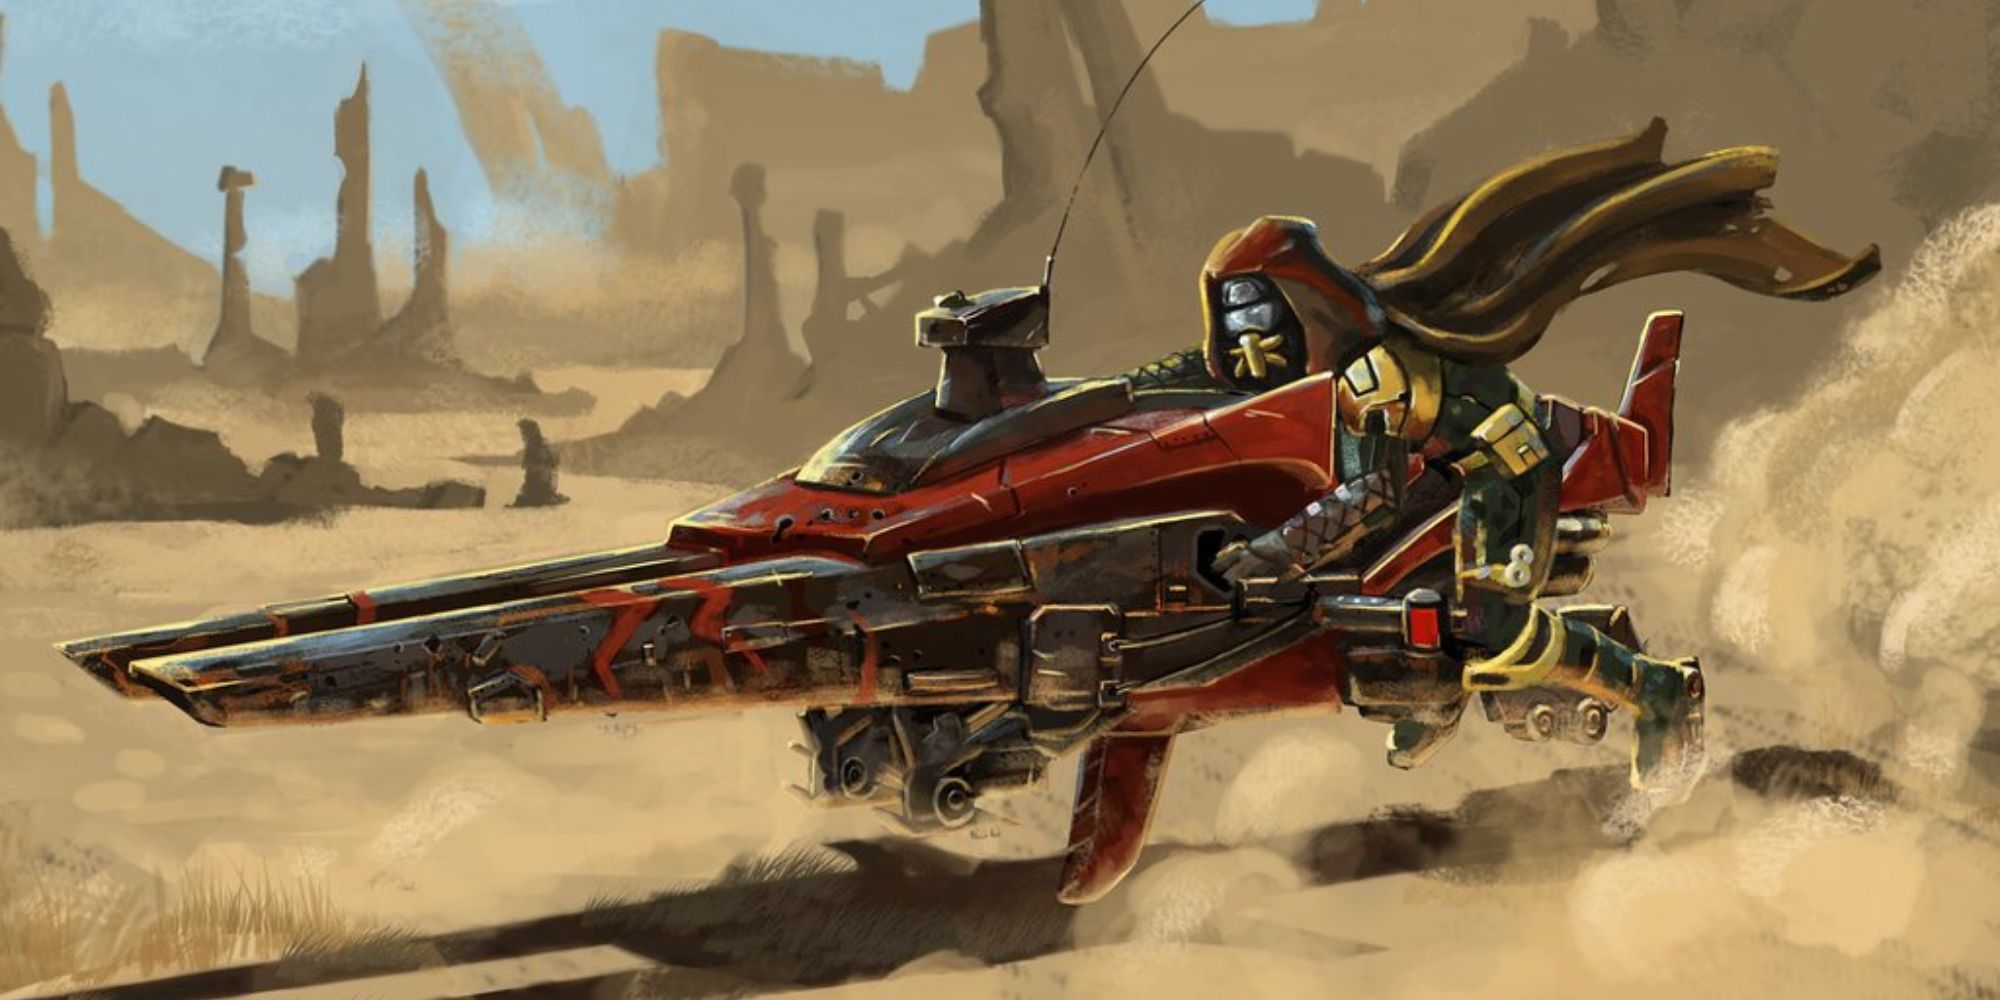 Best Vehicles concept art of a hooded figured riding a Sparrow from Destiny riding across a desert dune